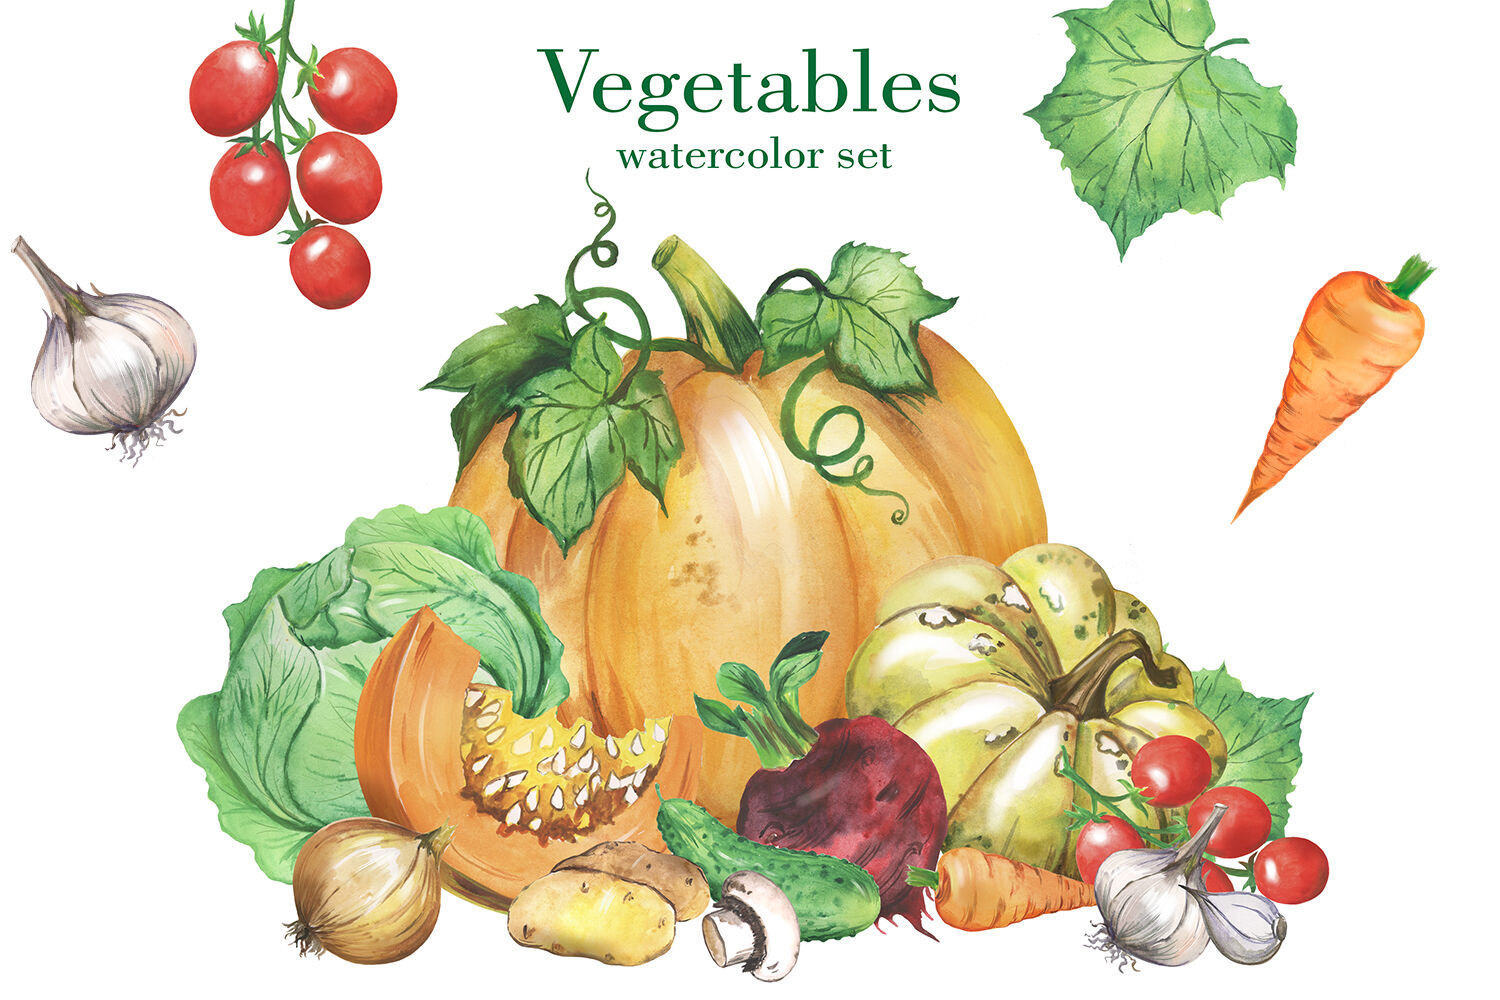 watercolor art kitchen art Vegetables 4 x 6 Food illustration decor Green Beans  Watercolor Painting Original